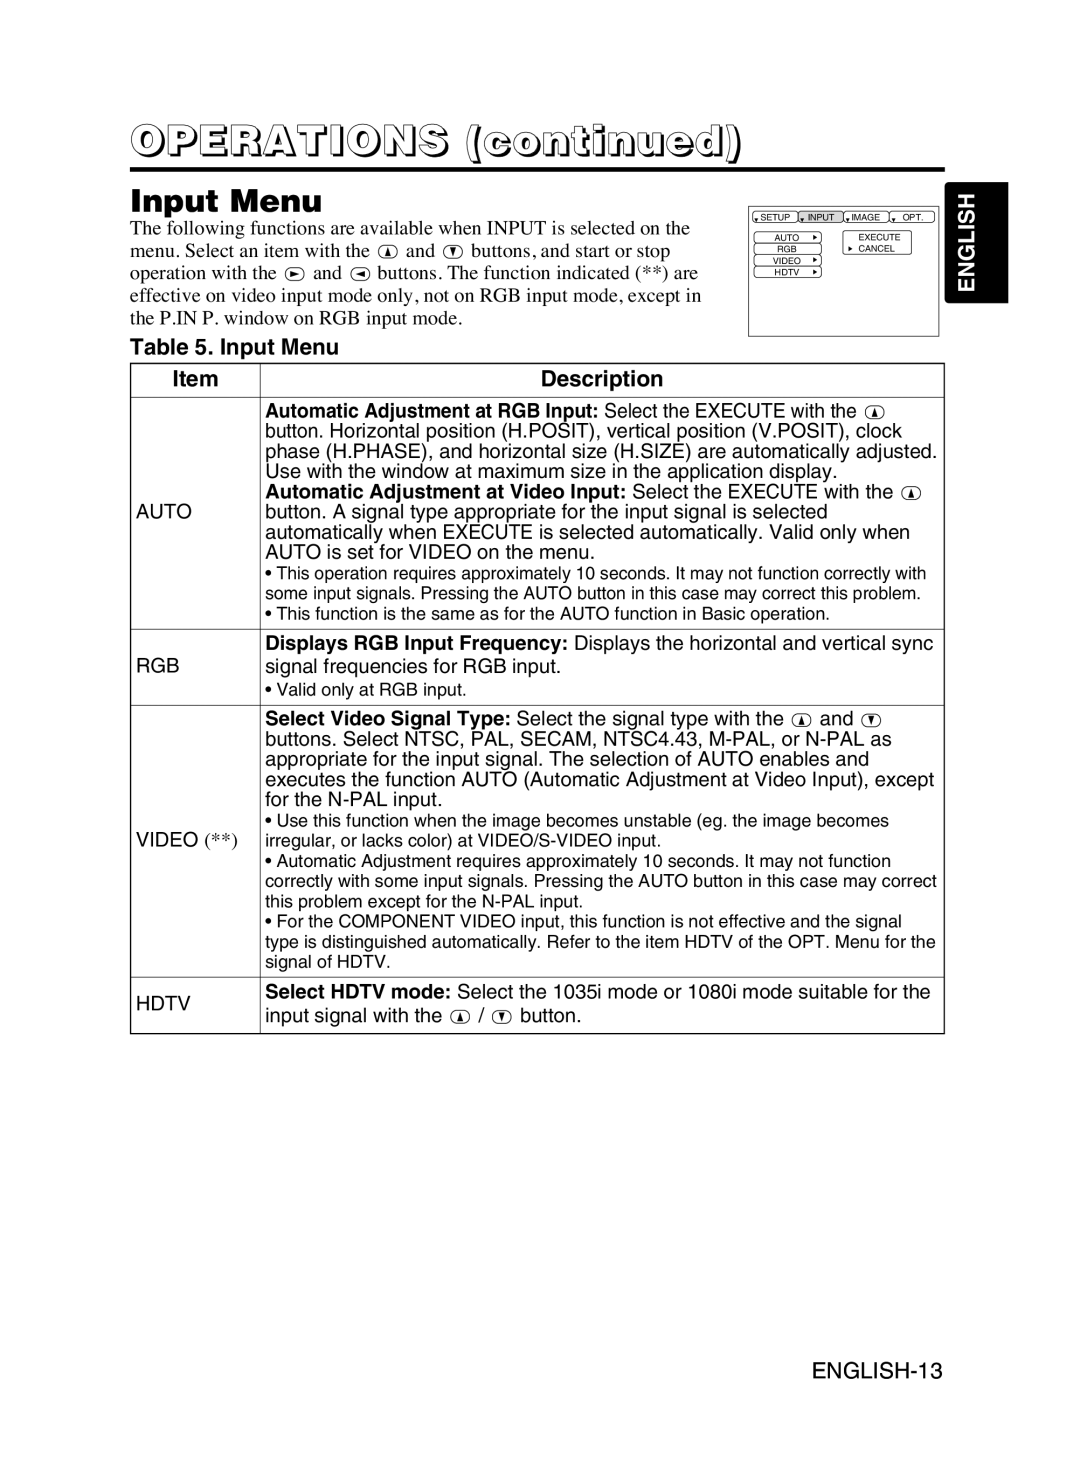 Dukane 8053 user manual Input Menu, OPERATIONS continued, English, Description 